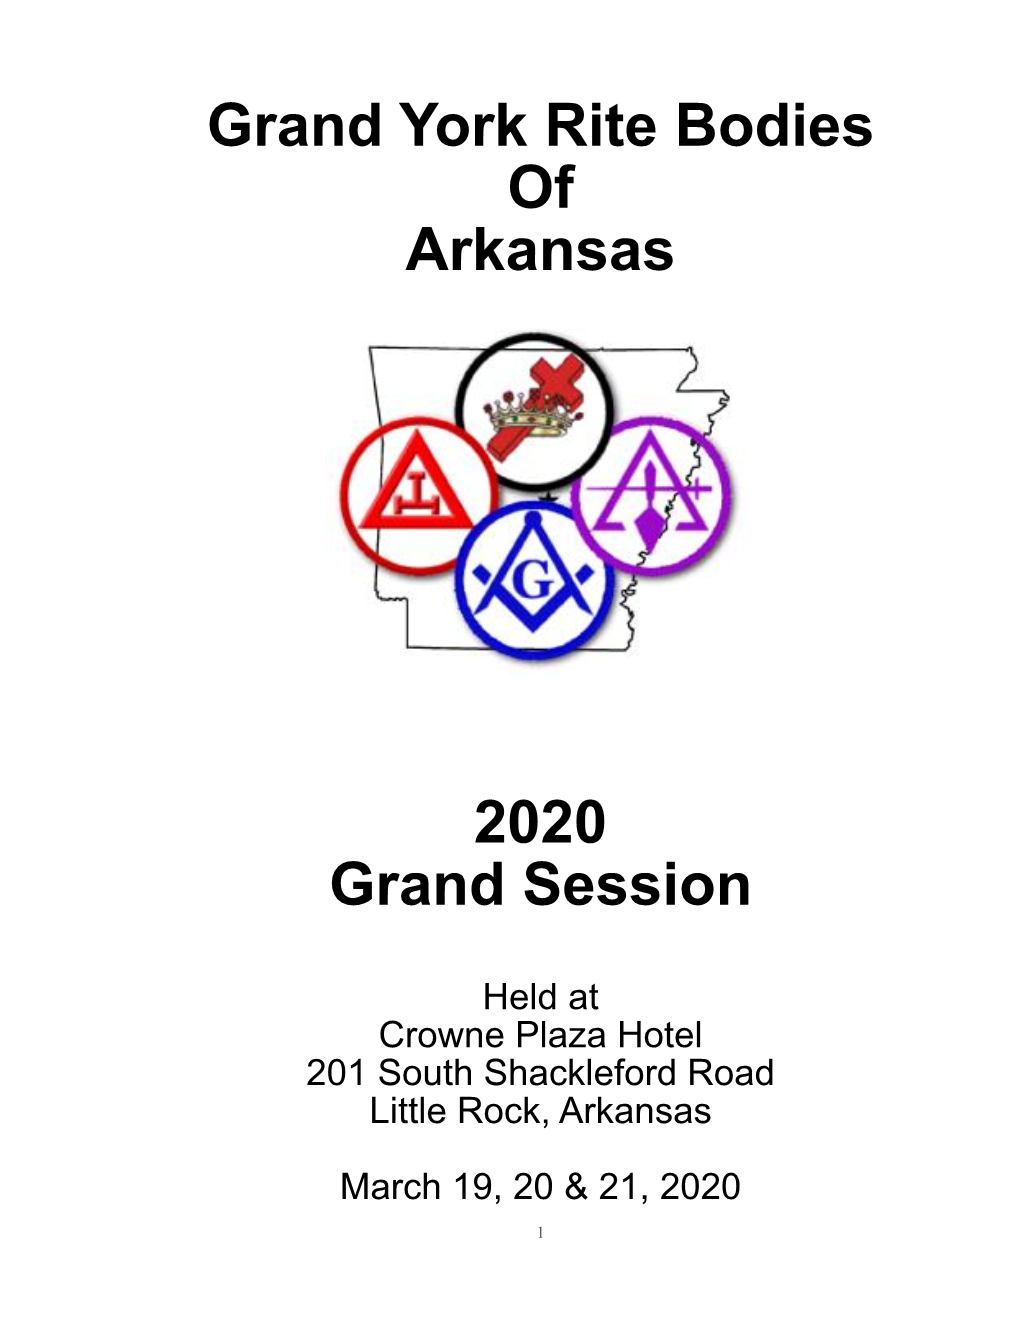 Grand York Rite Bodies of Arkansas 2020 Grand Session